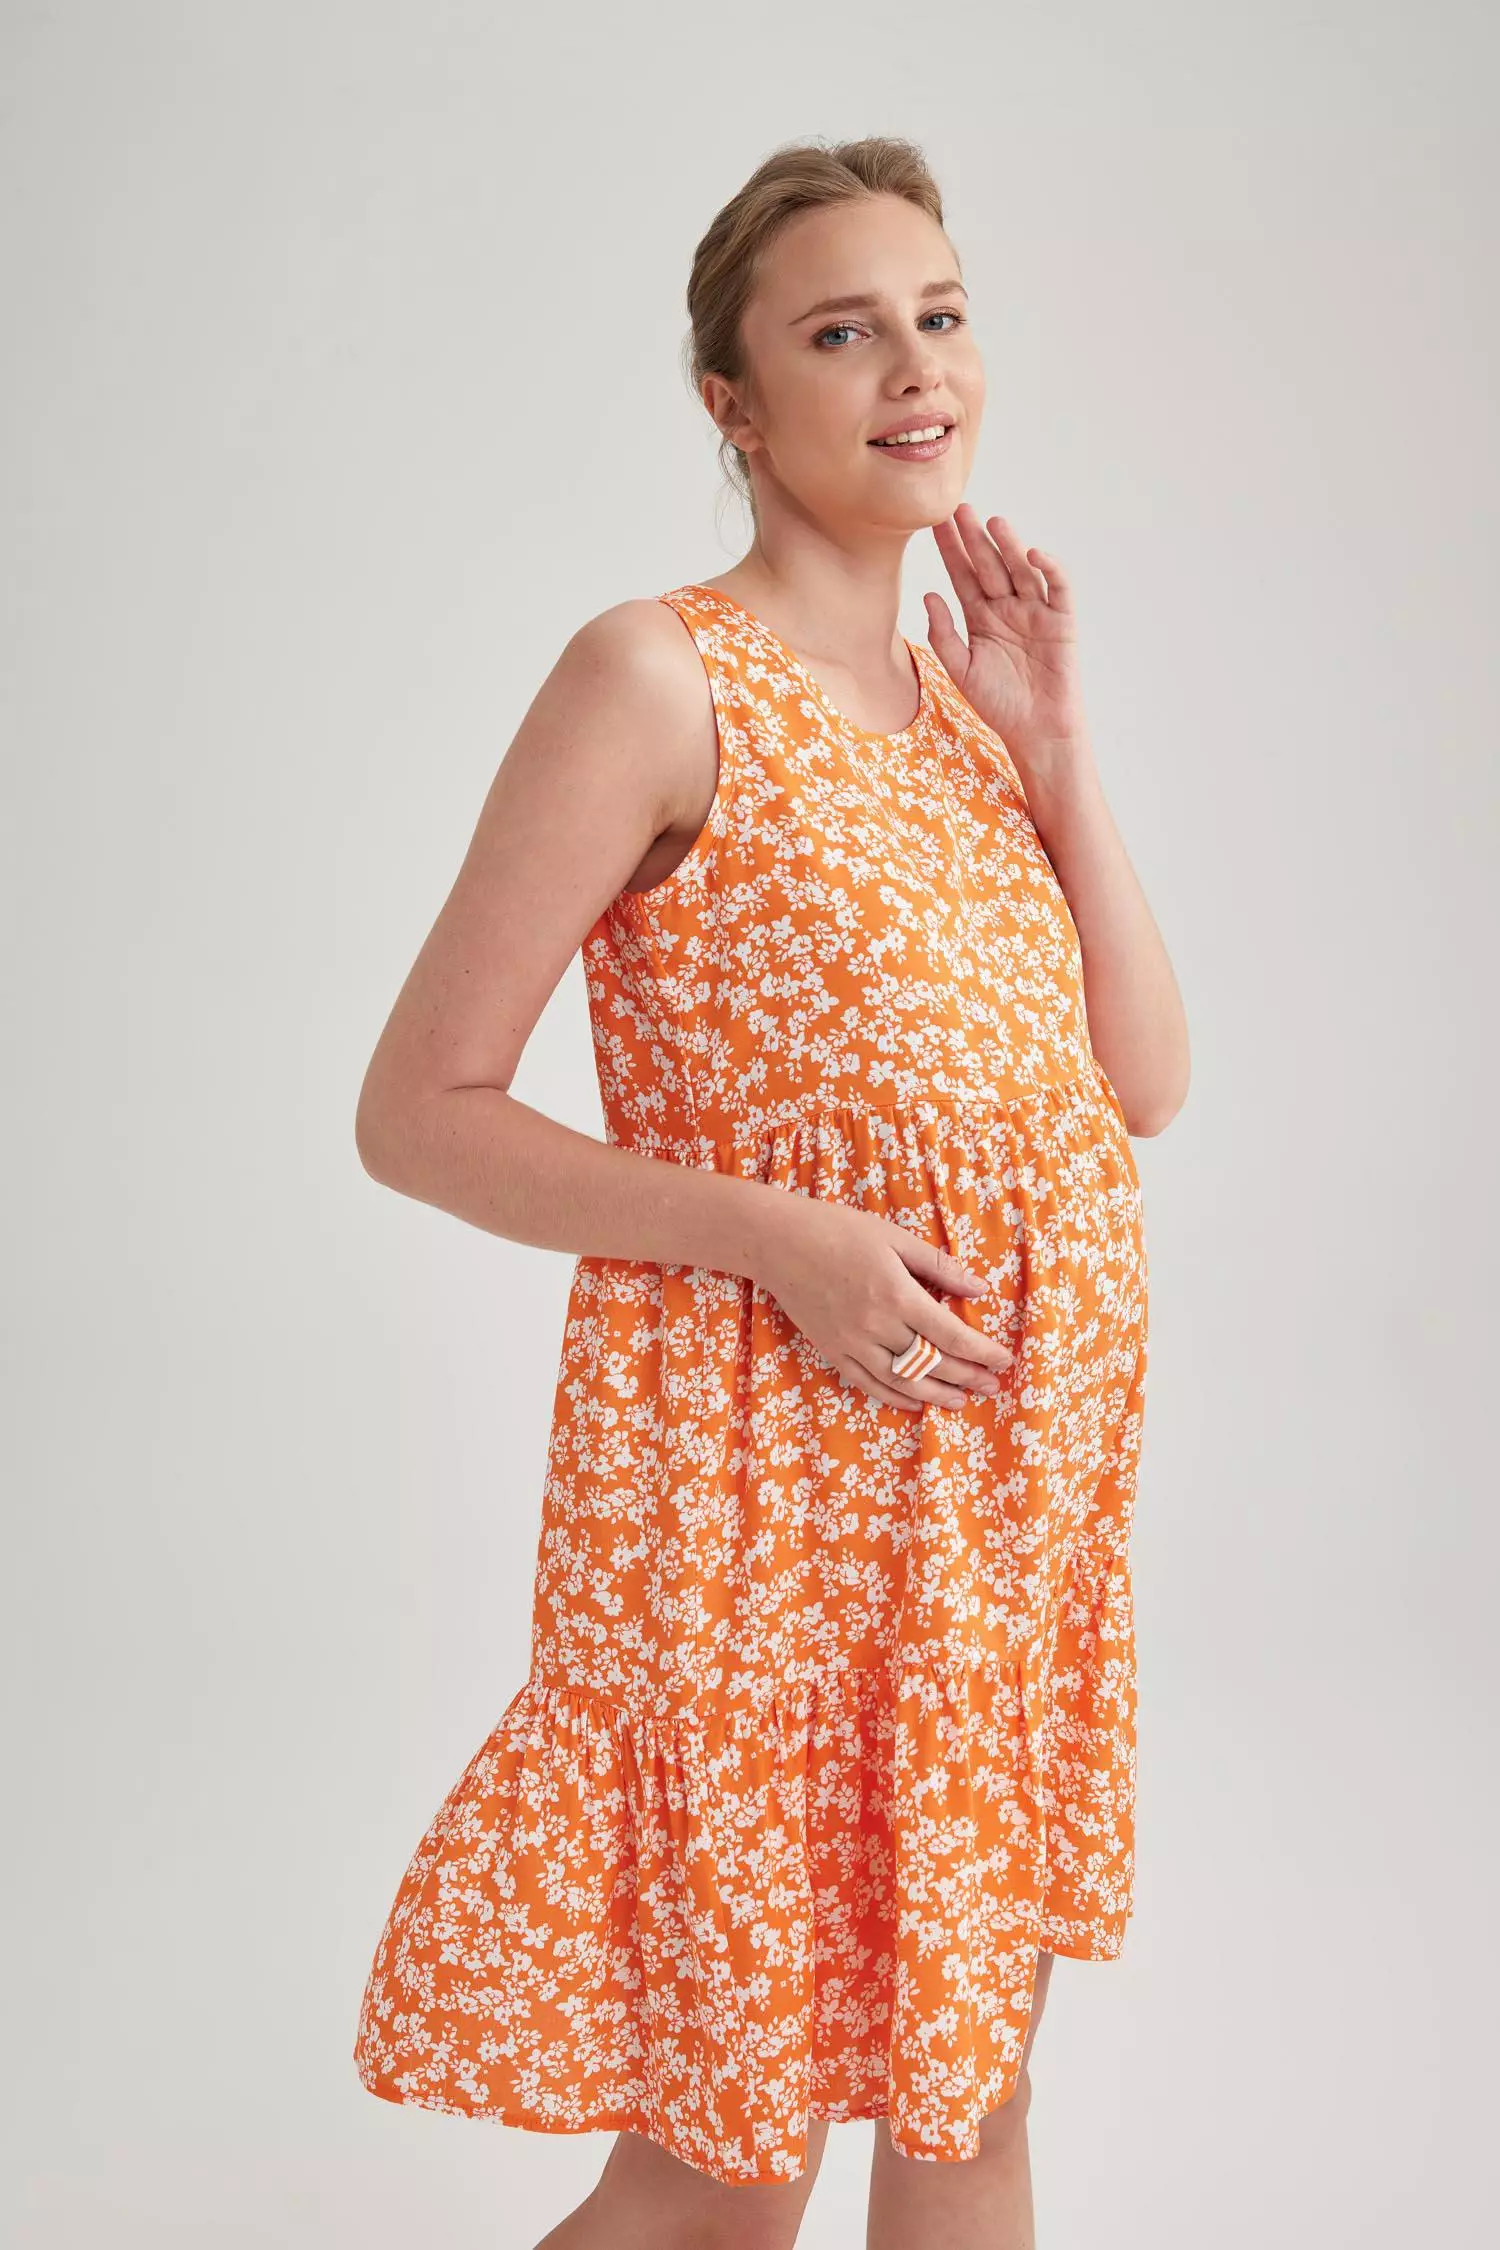 Buy 9months Maternity Neutral Overlap Lace Trim Maternity Nursing